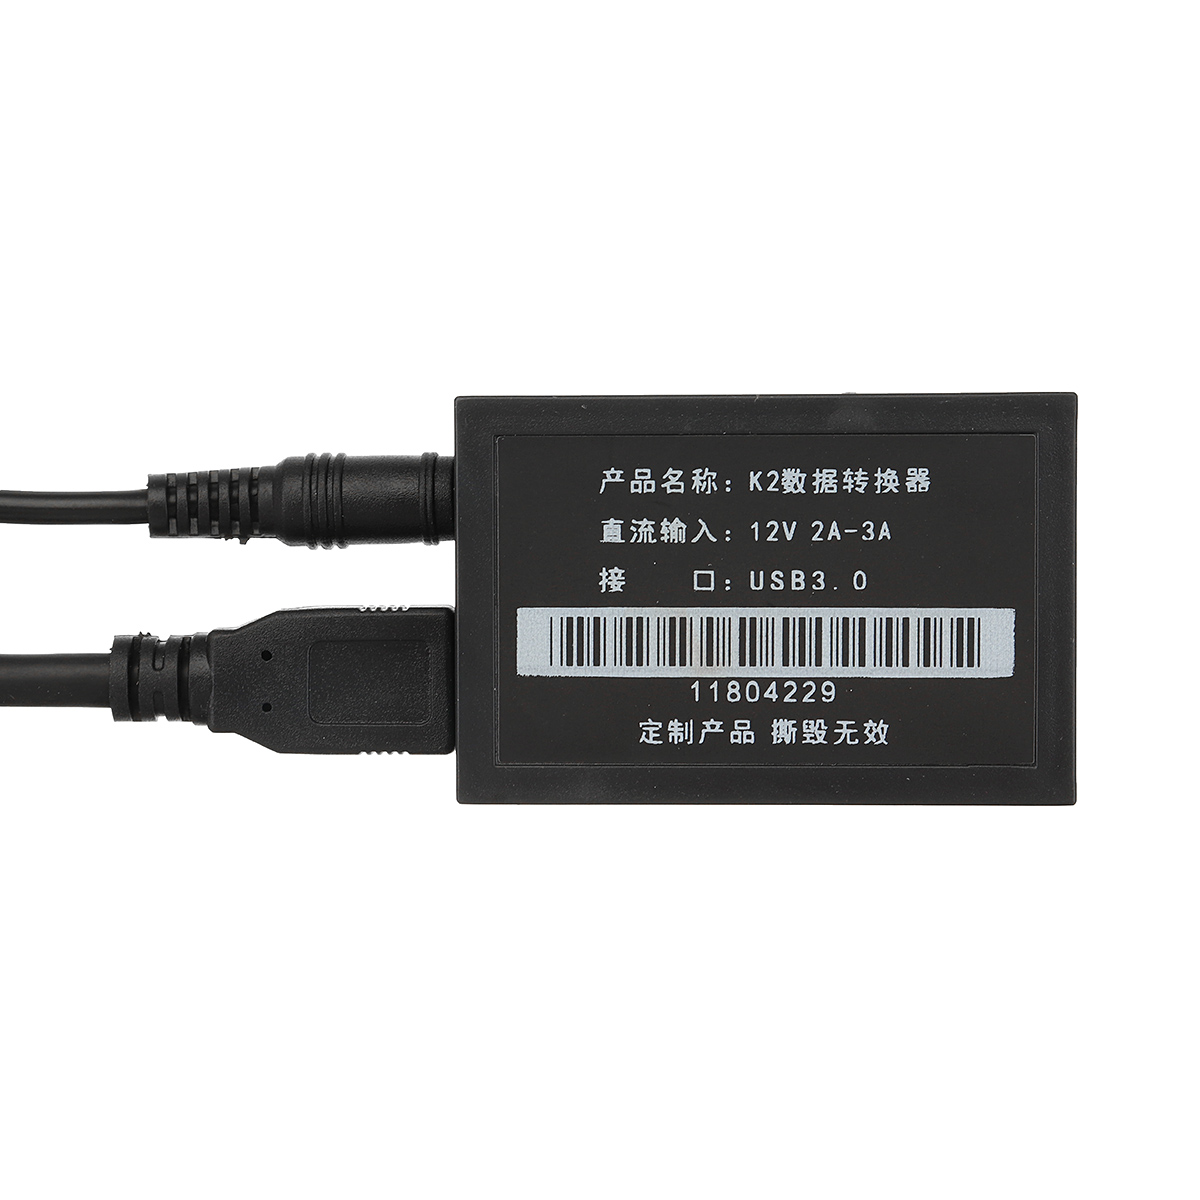 Power-20-Power-AC-Adapter-USEUAU-Plug-PC-Development-Kit-For-Xbox-One-SX-Kinect-1319225-8